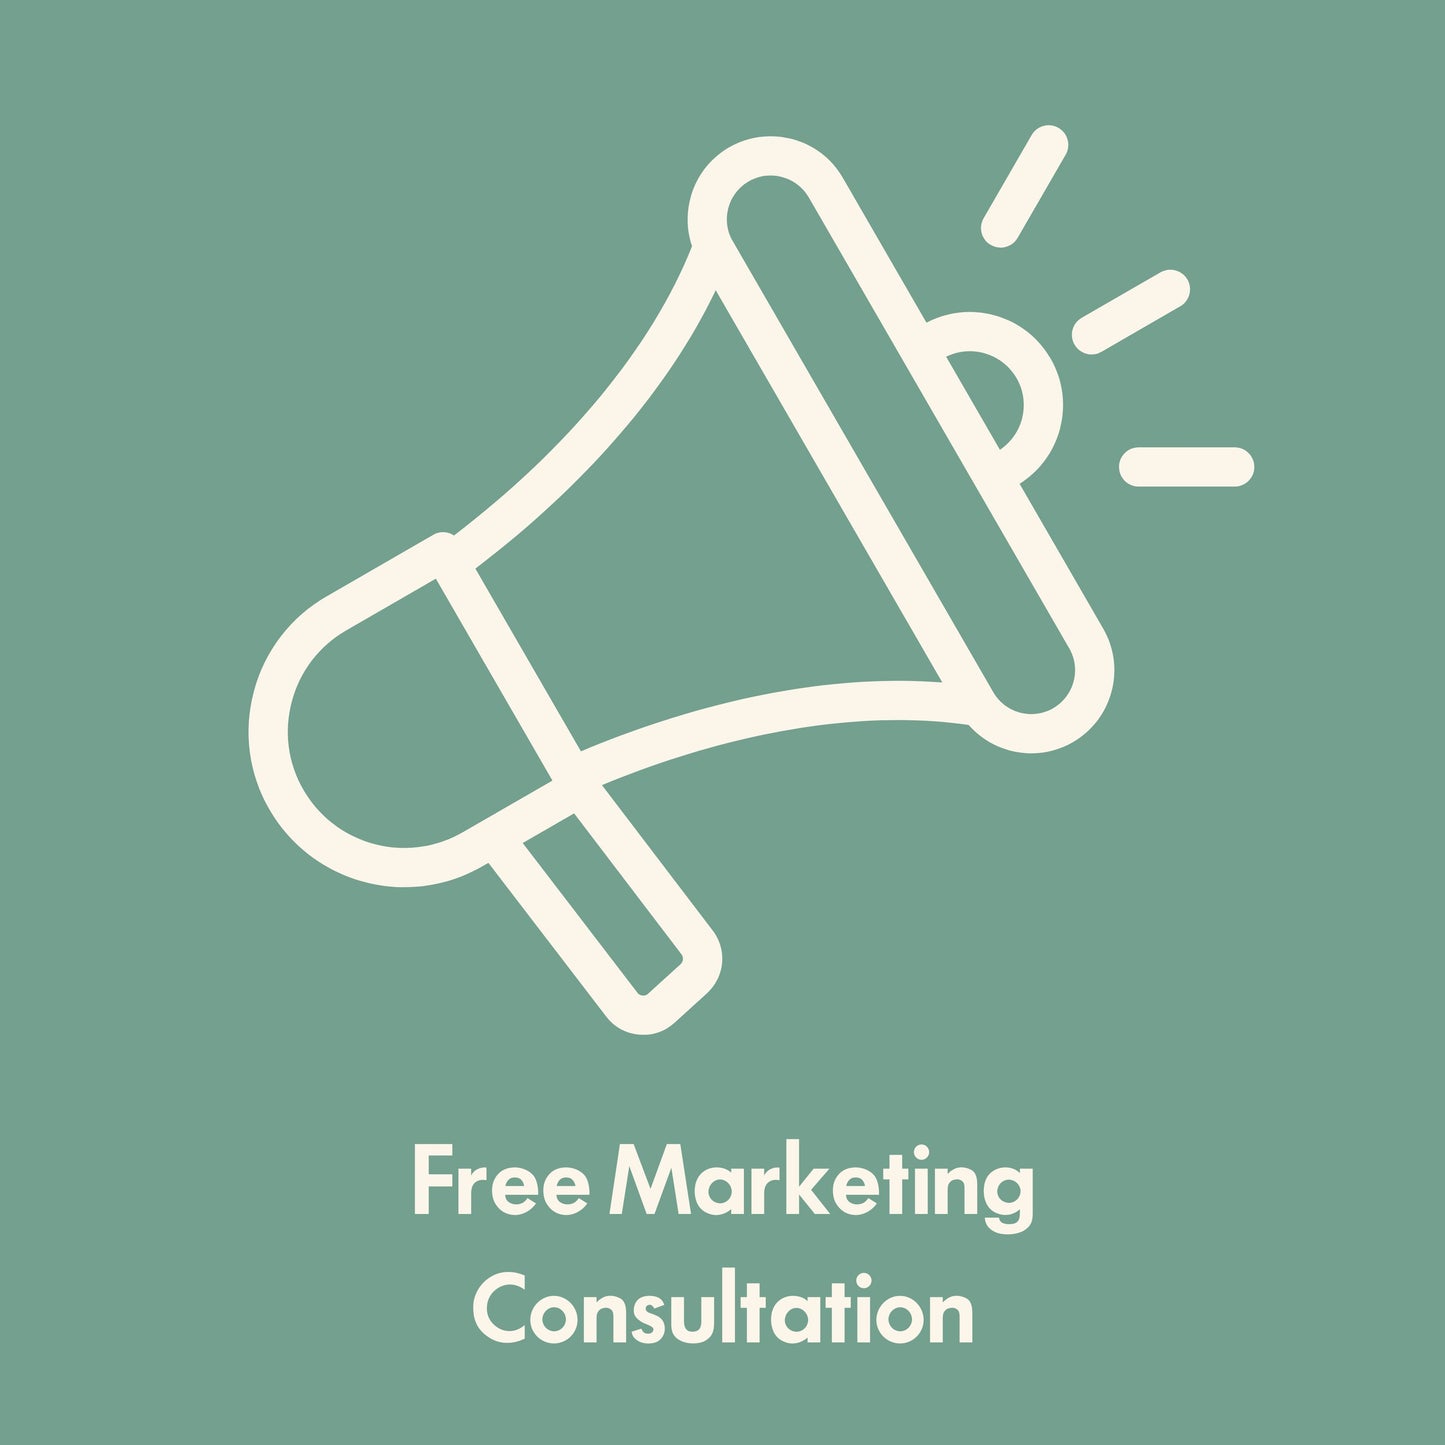 Free Marketing Consultation